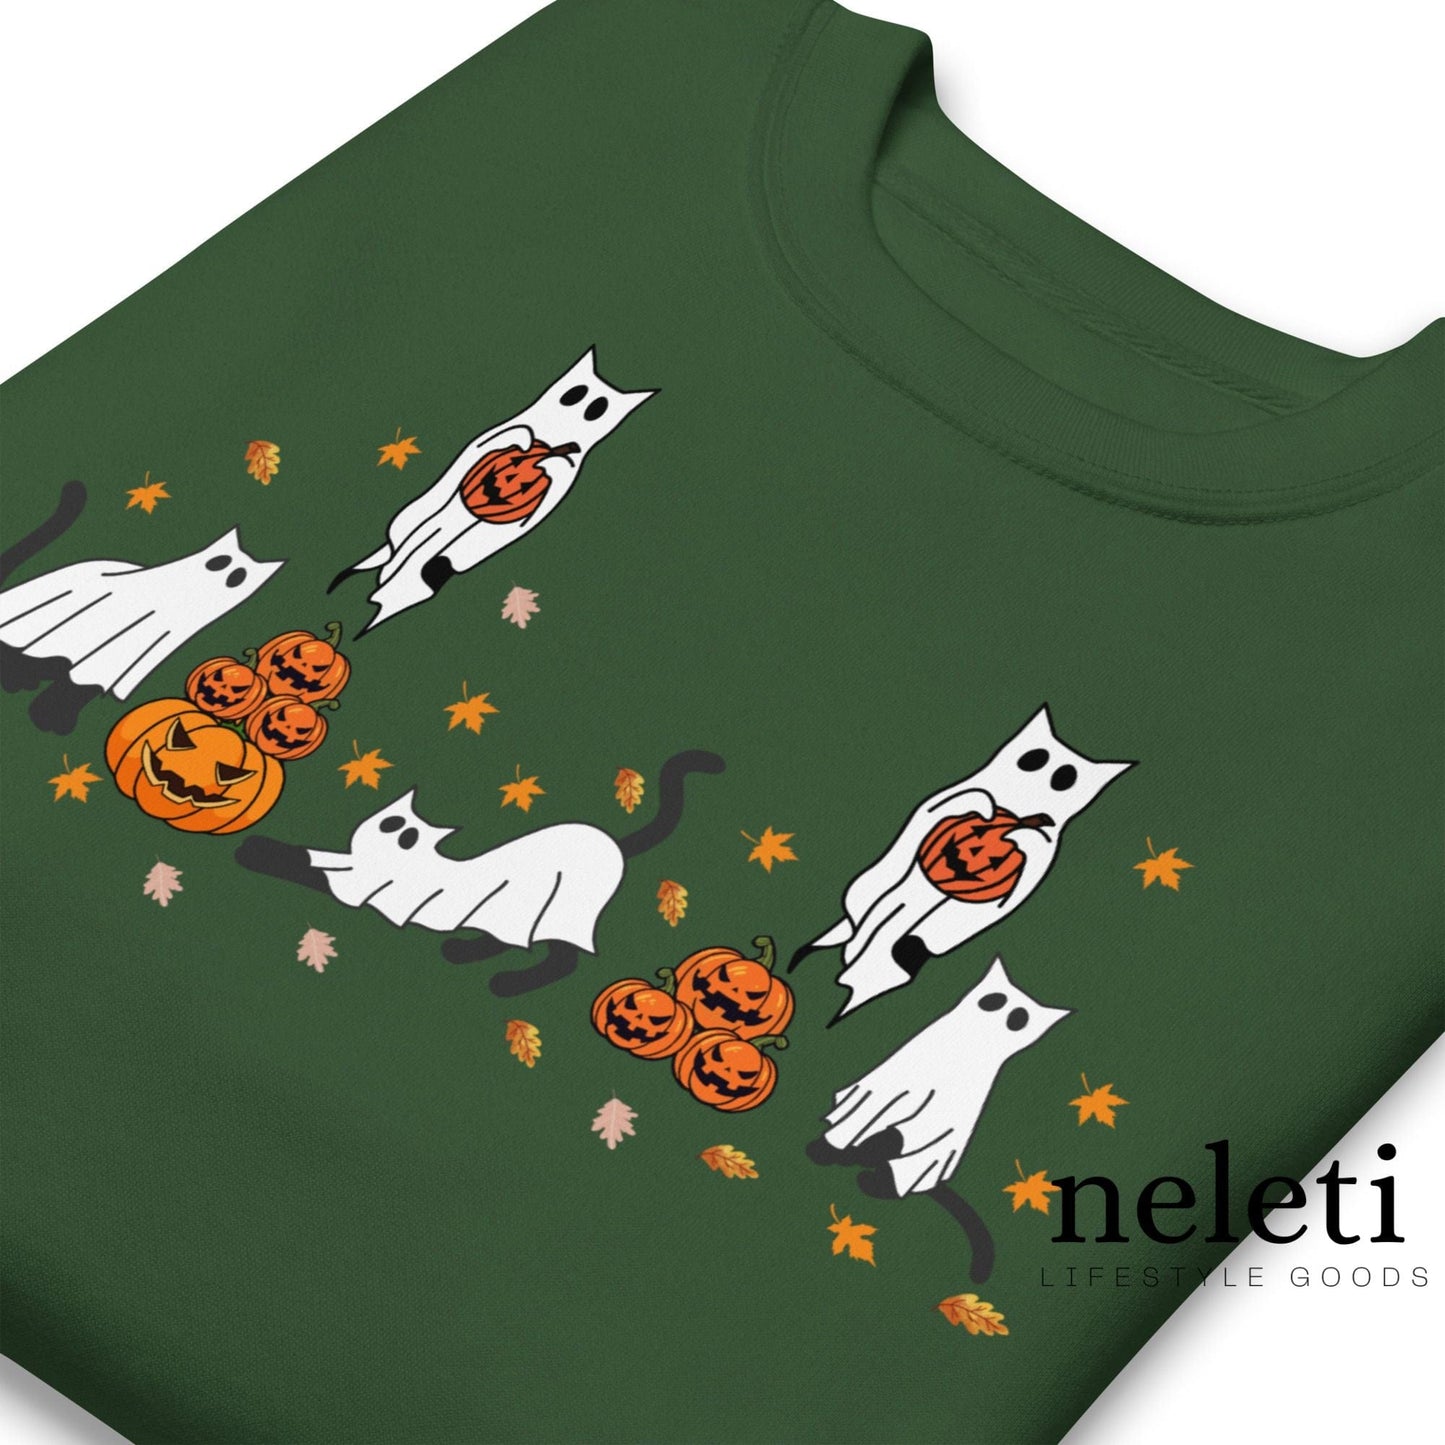 neleti.com-haloween-forest-green-sweatshirt-for-cat-lovers